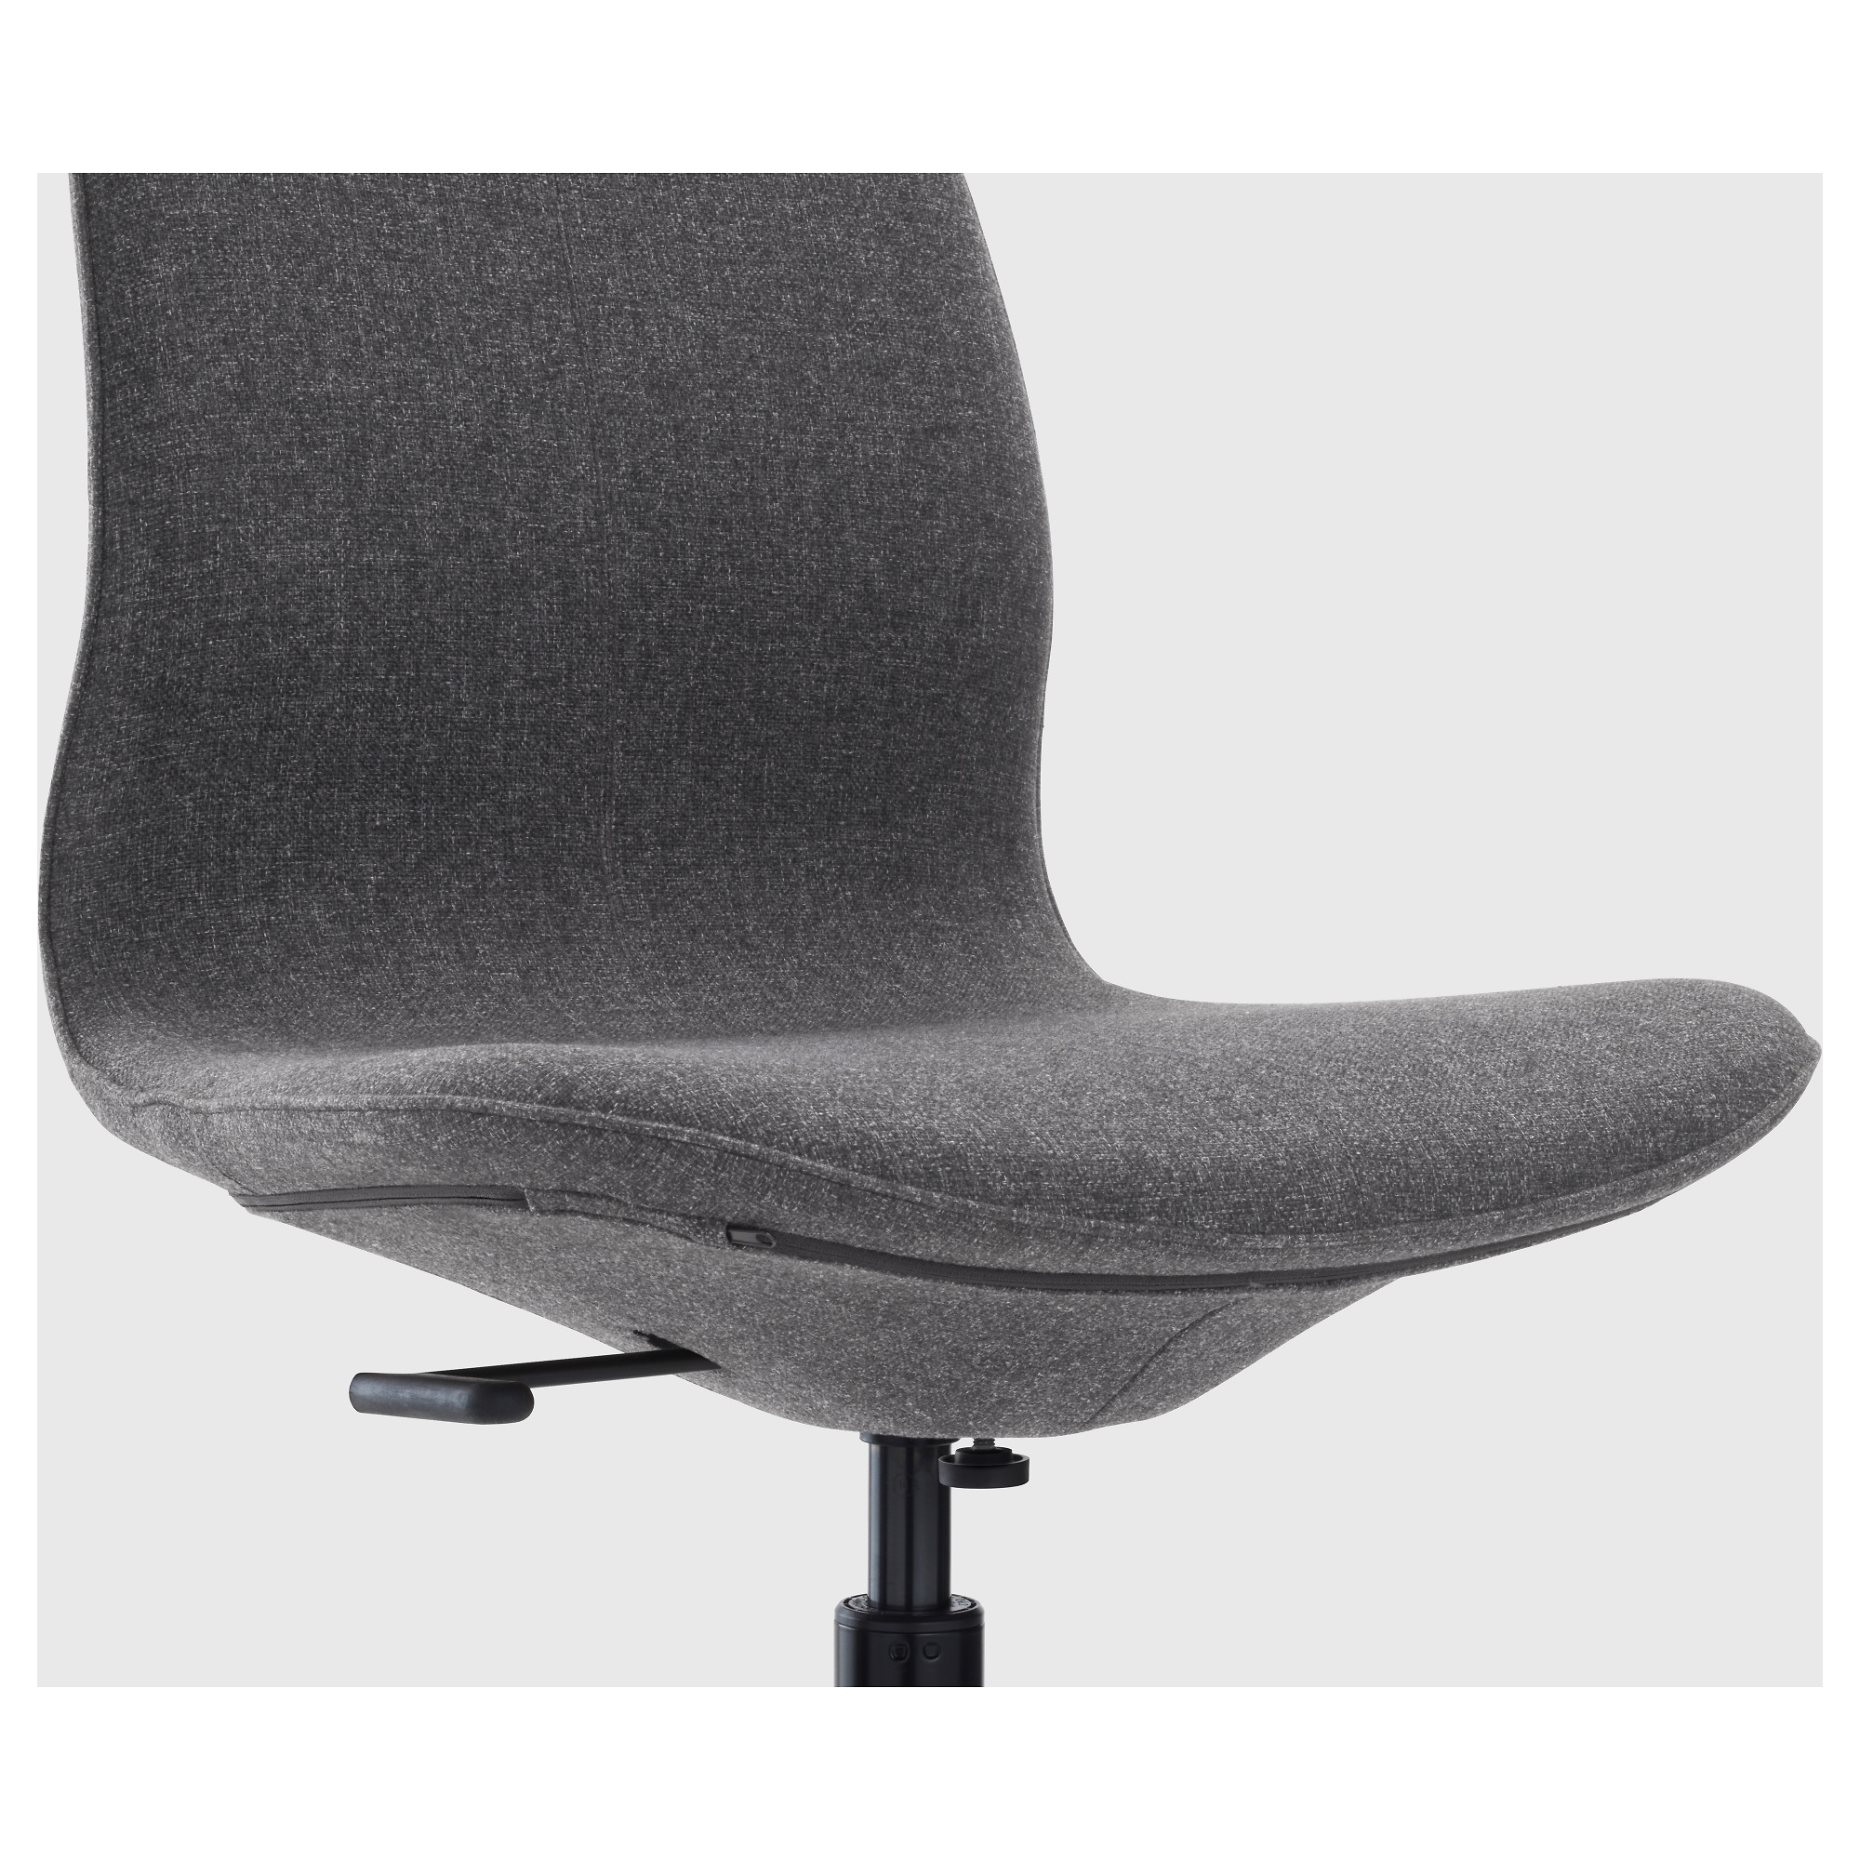 LÅNGFJÄLL, swivel chair, 191.749.72